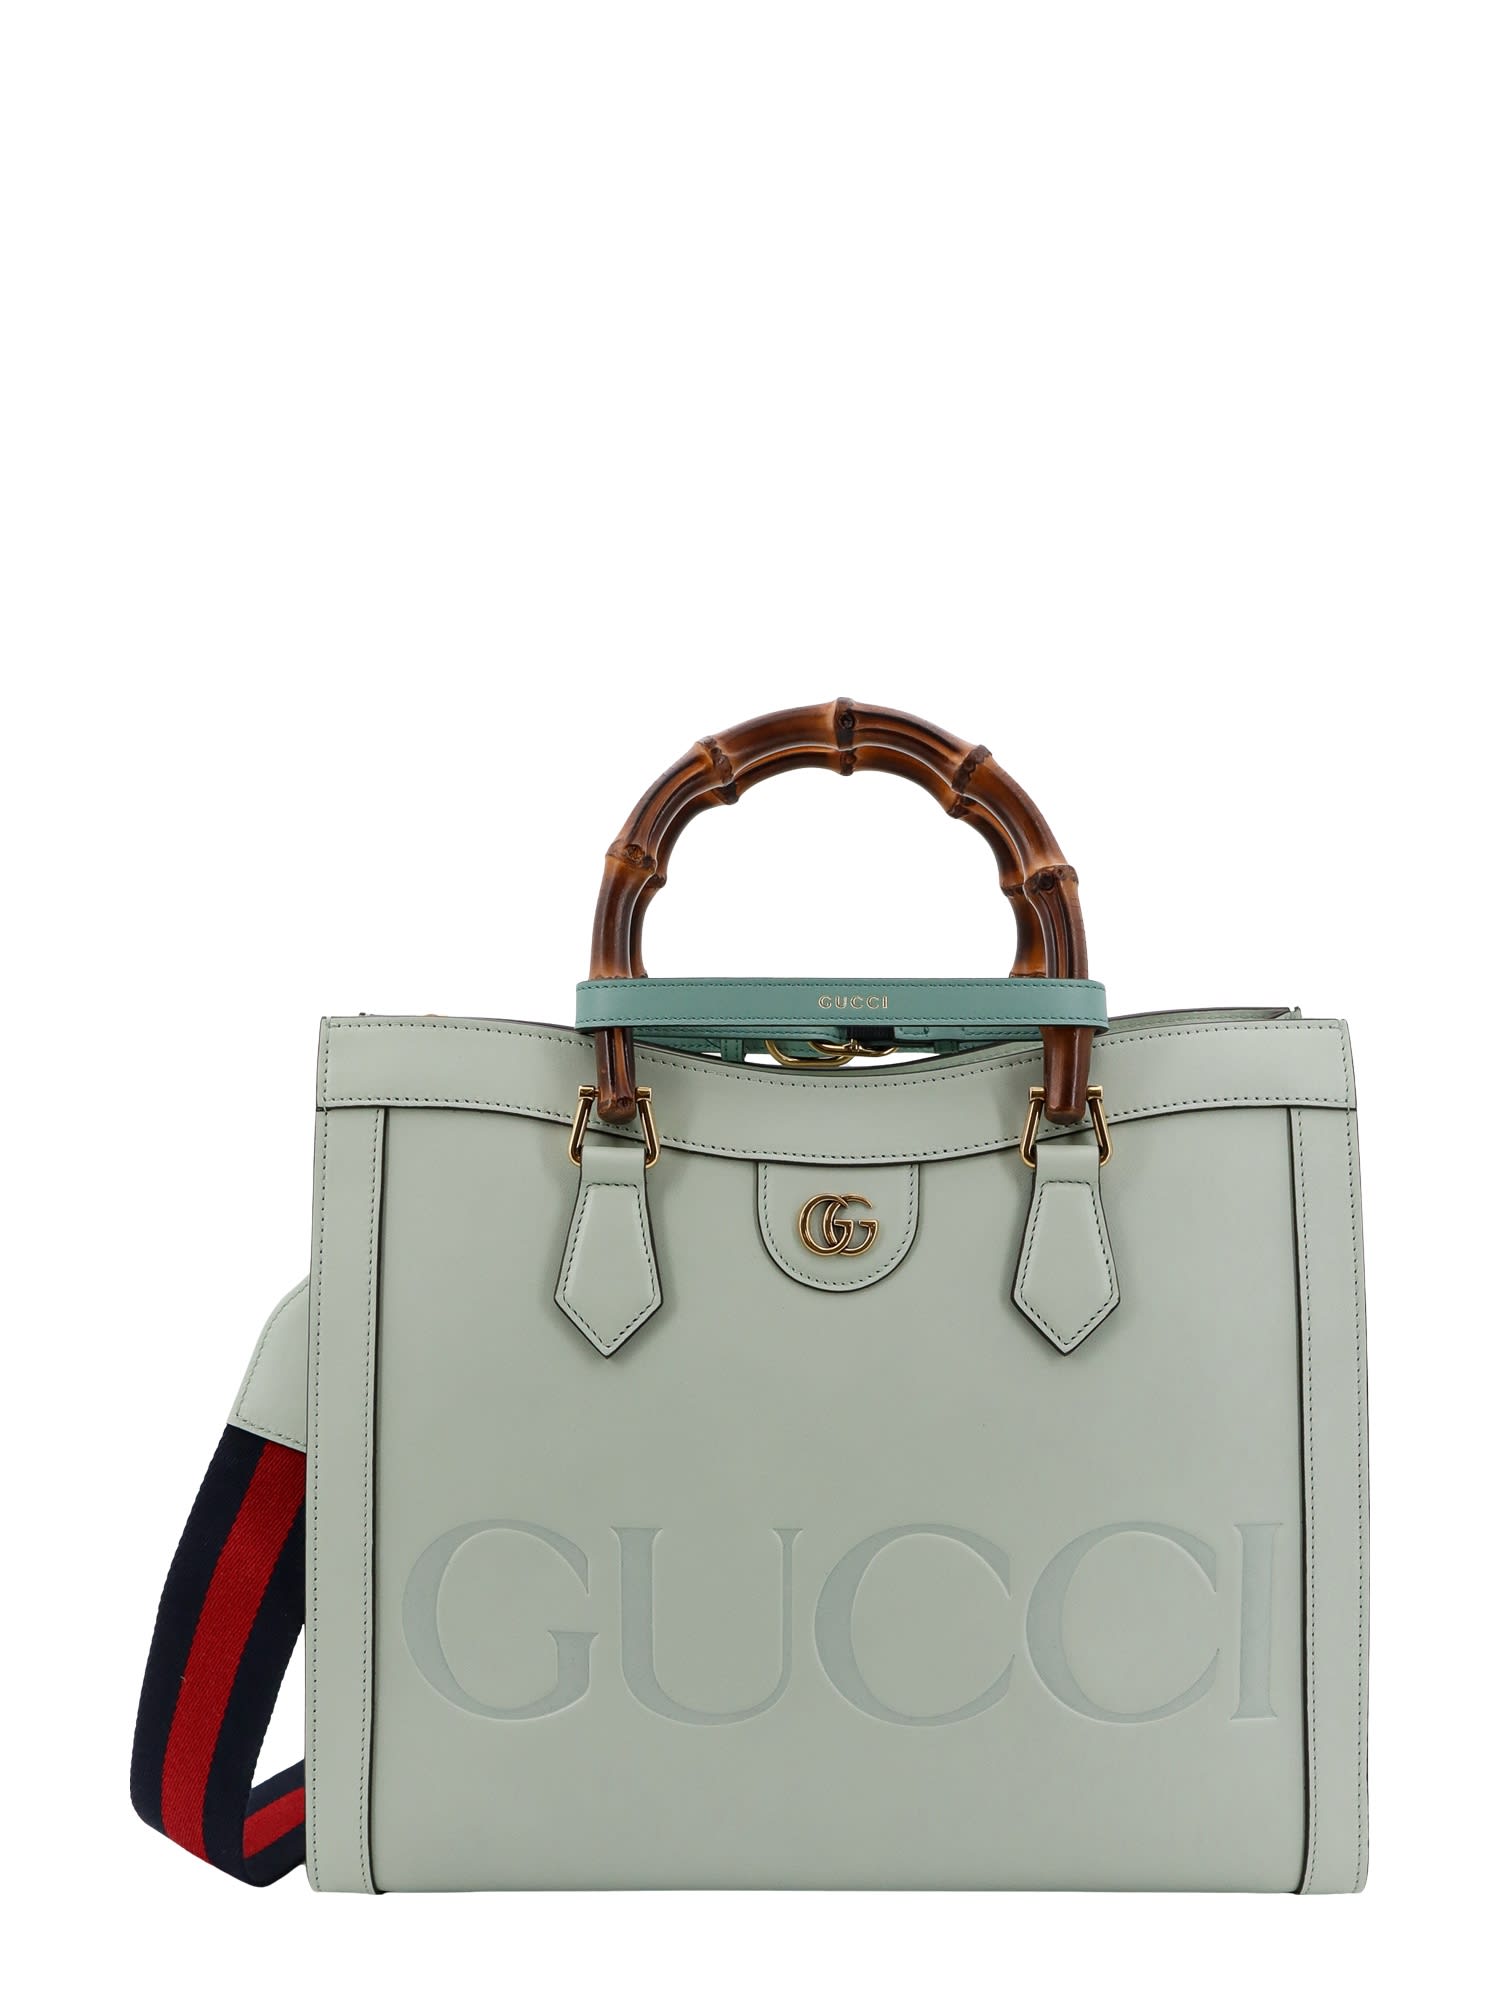 Gucci Diana Handbag In Green